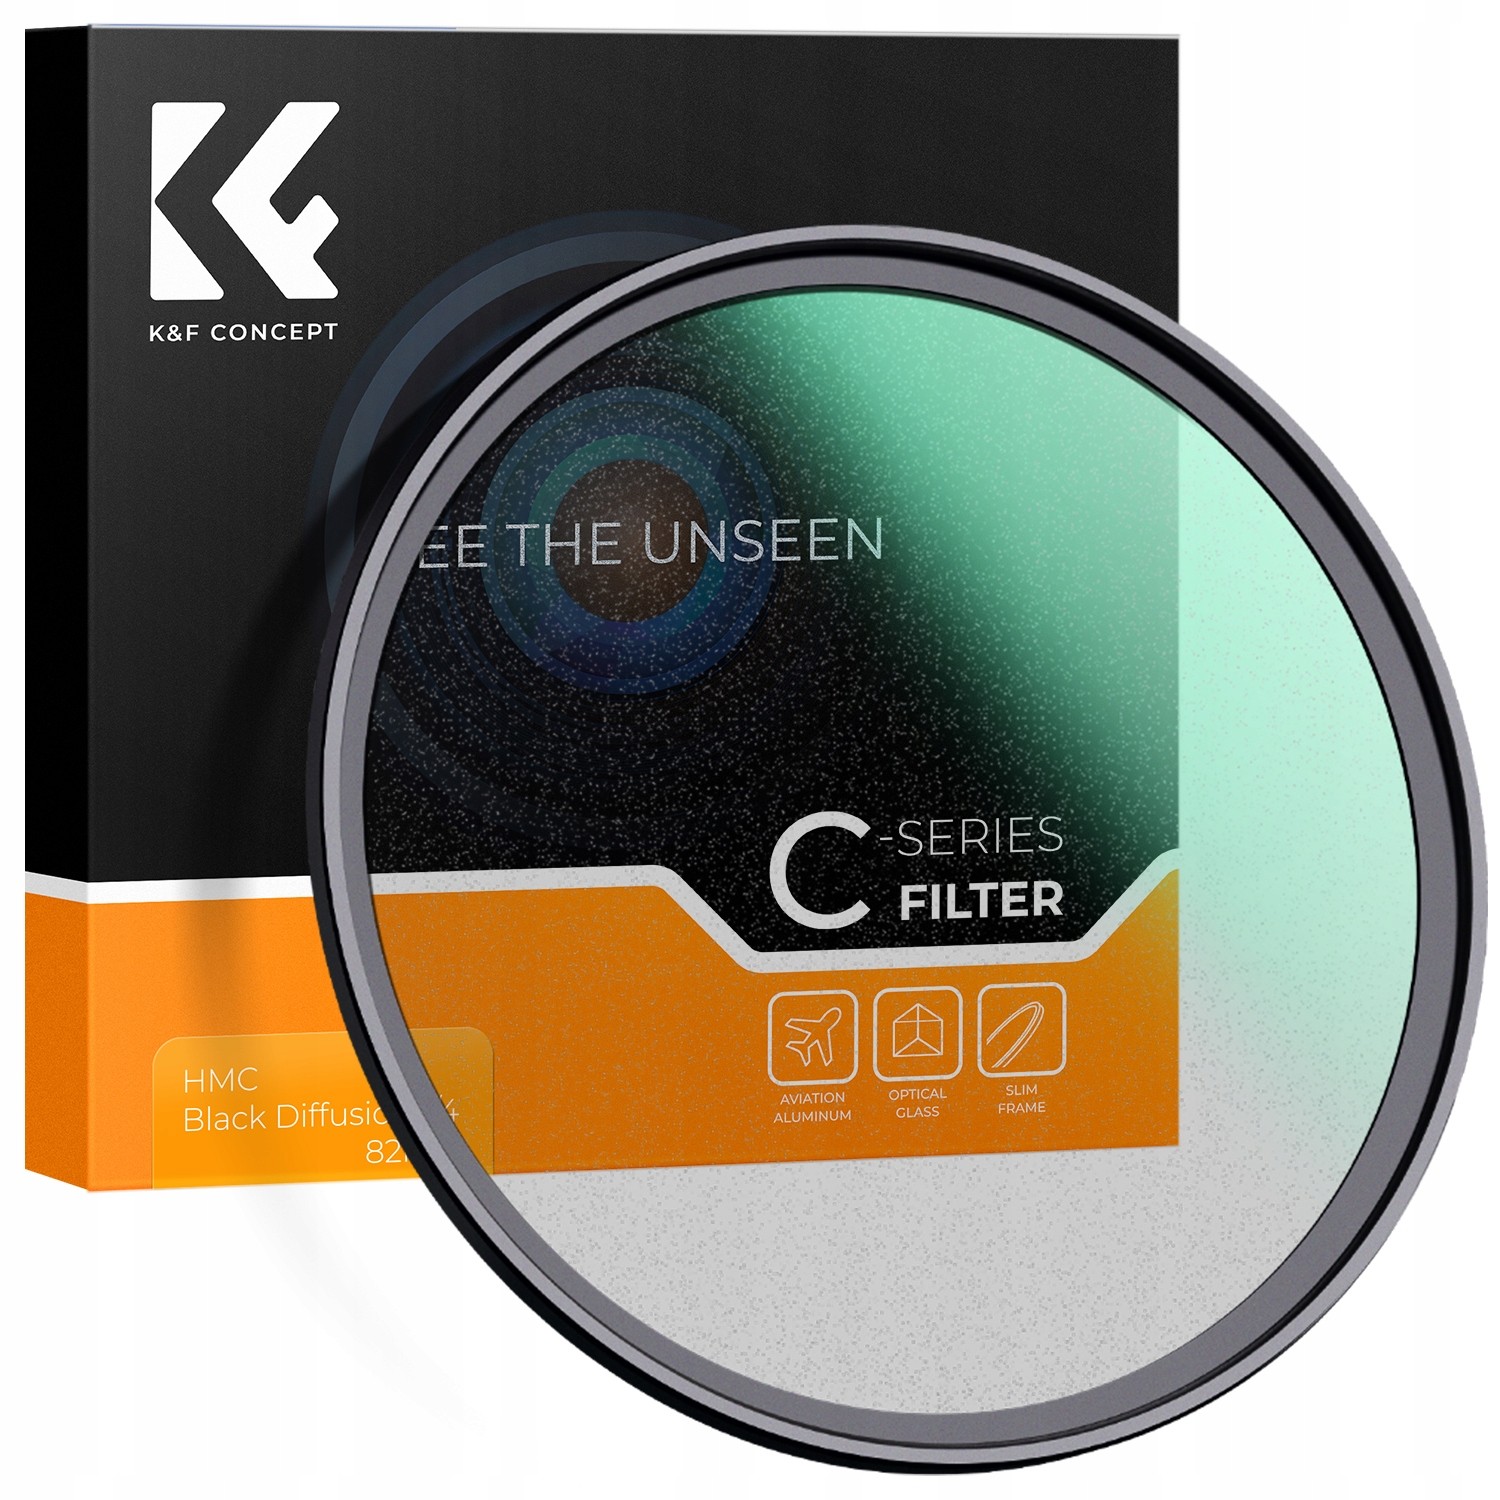 Difuzní filtr Black Mist 1/4 55mm Nano-C K&f